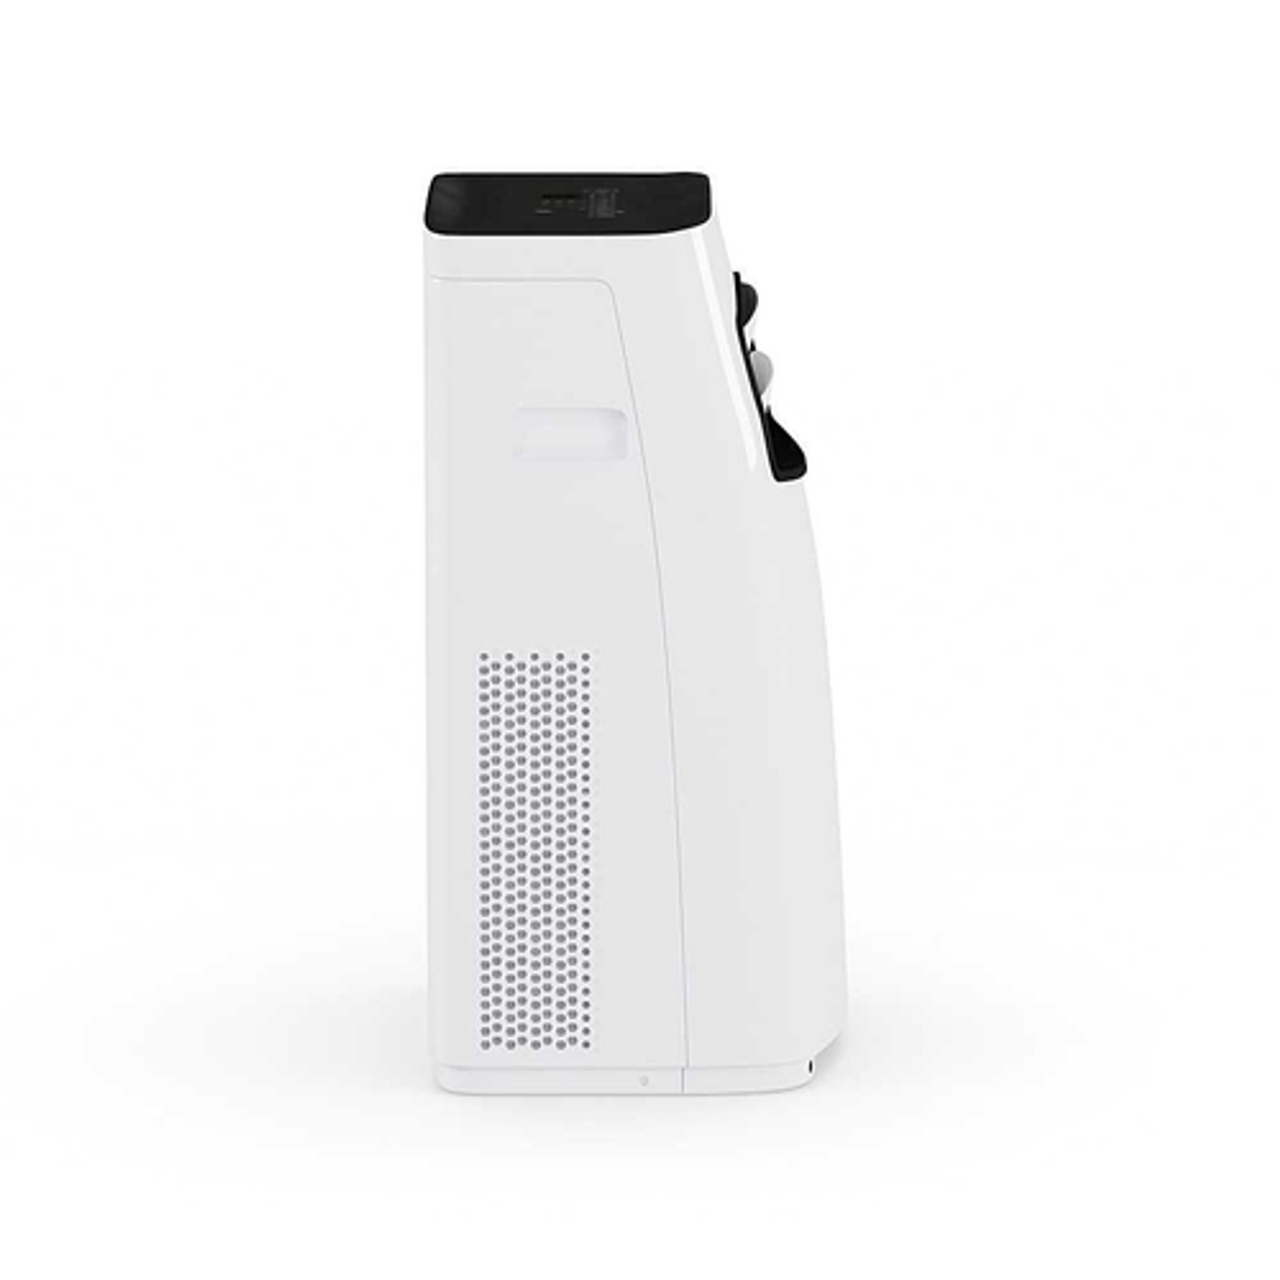 Danby - 12,000 BTU 3-in-1 Portable Air Conditioner - White